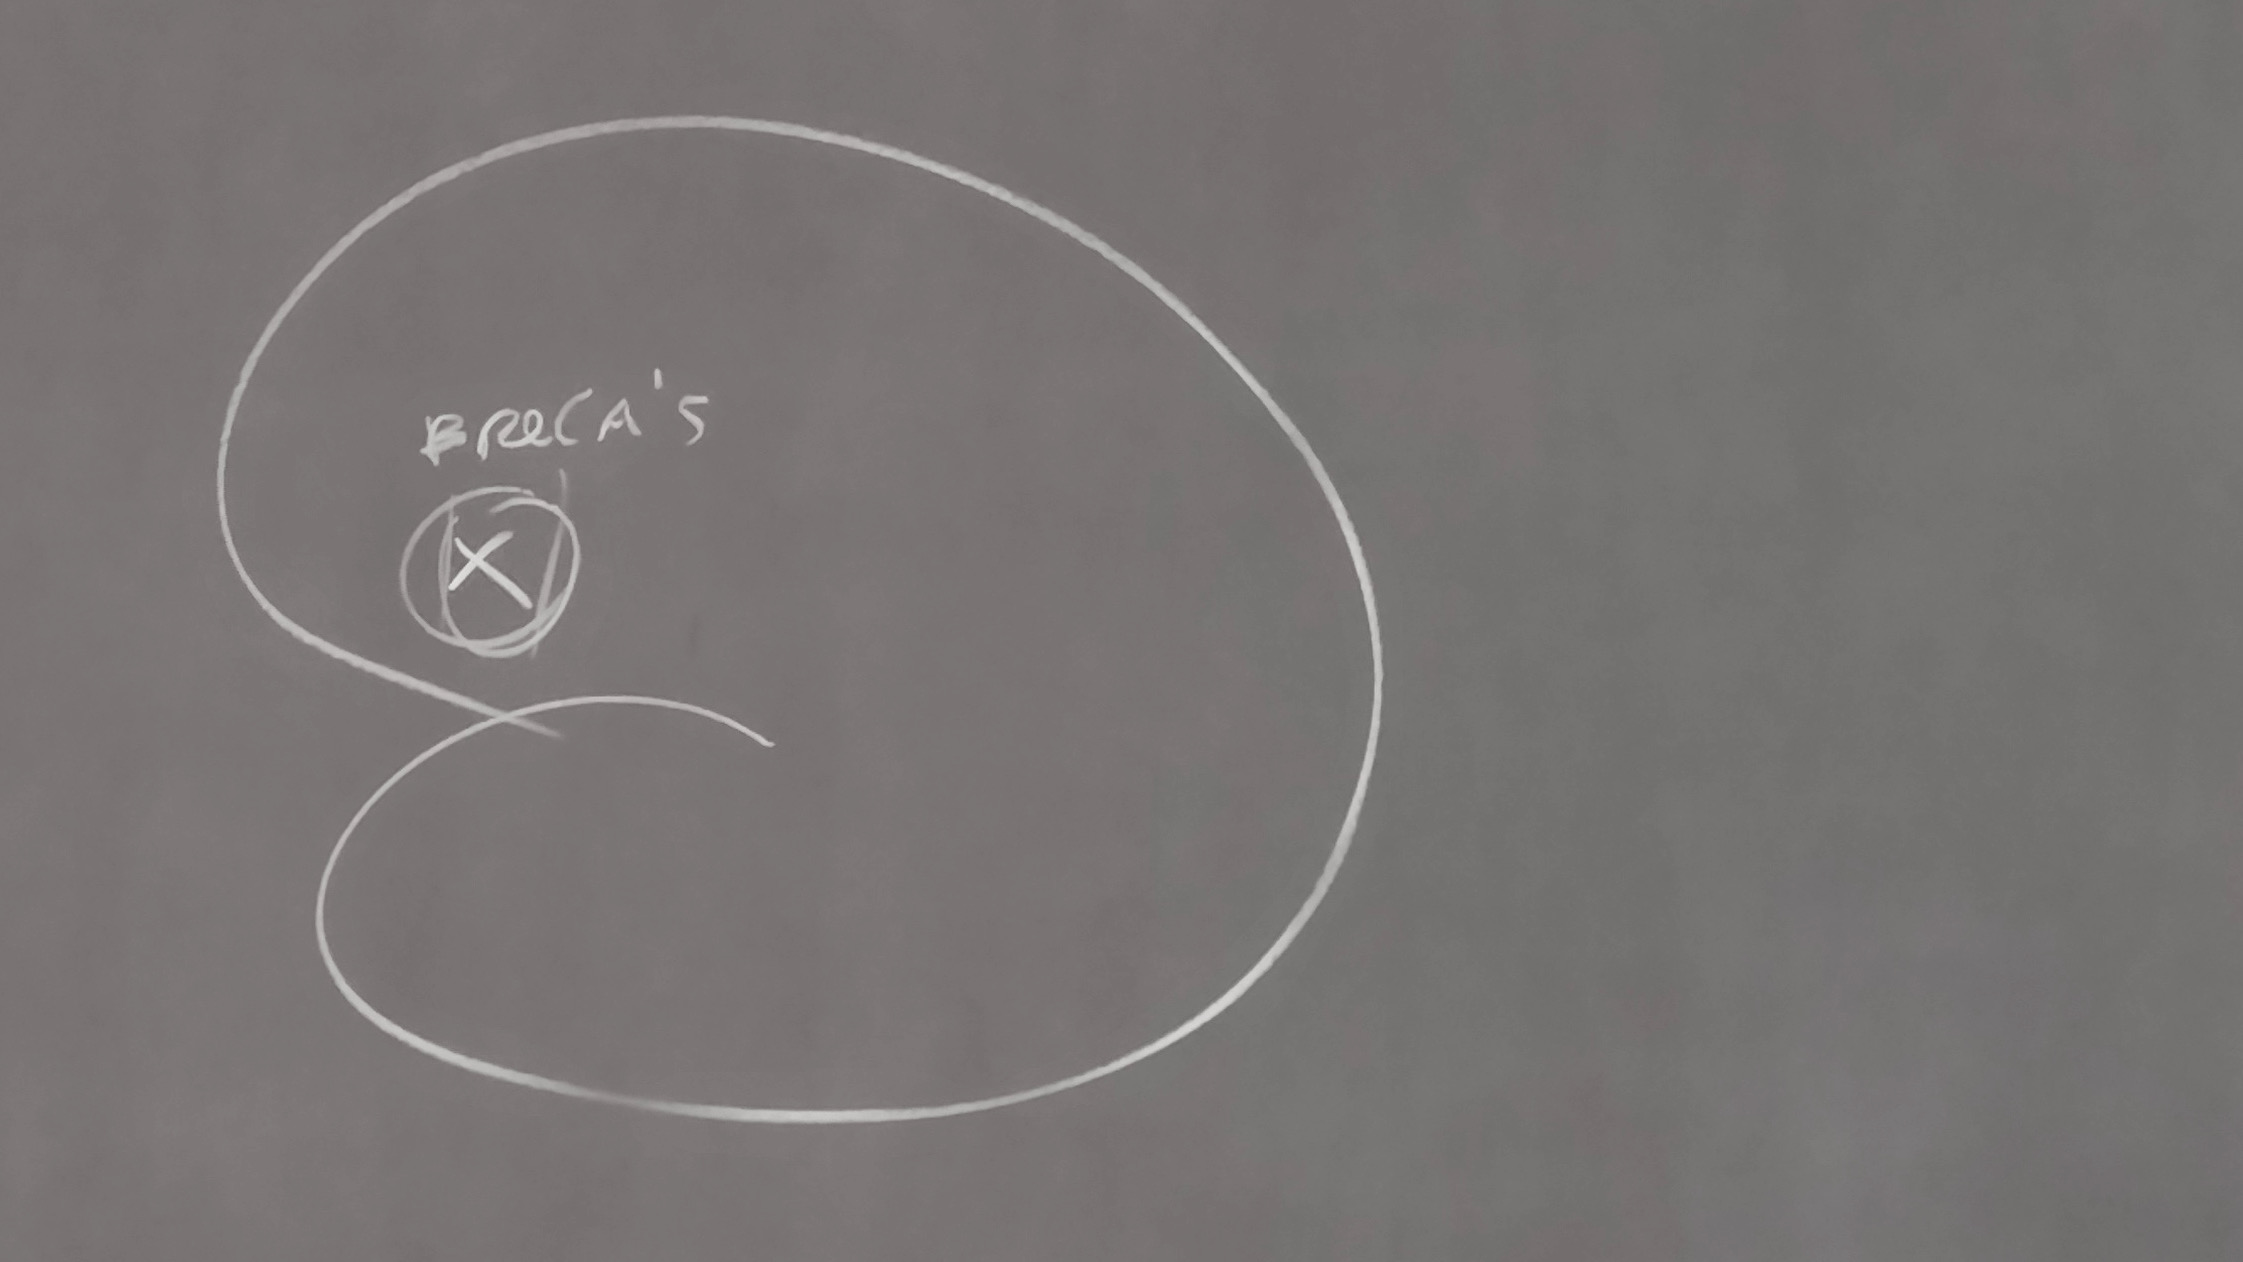 A primitive chalk sketch of a brain on a blackboard